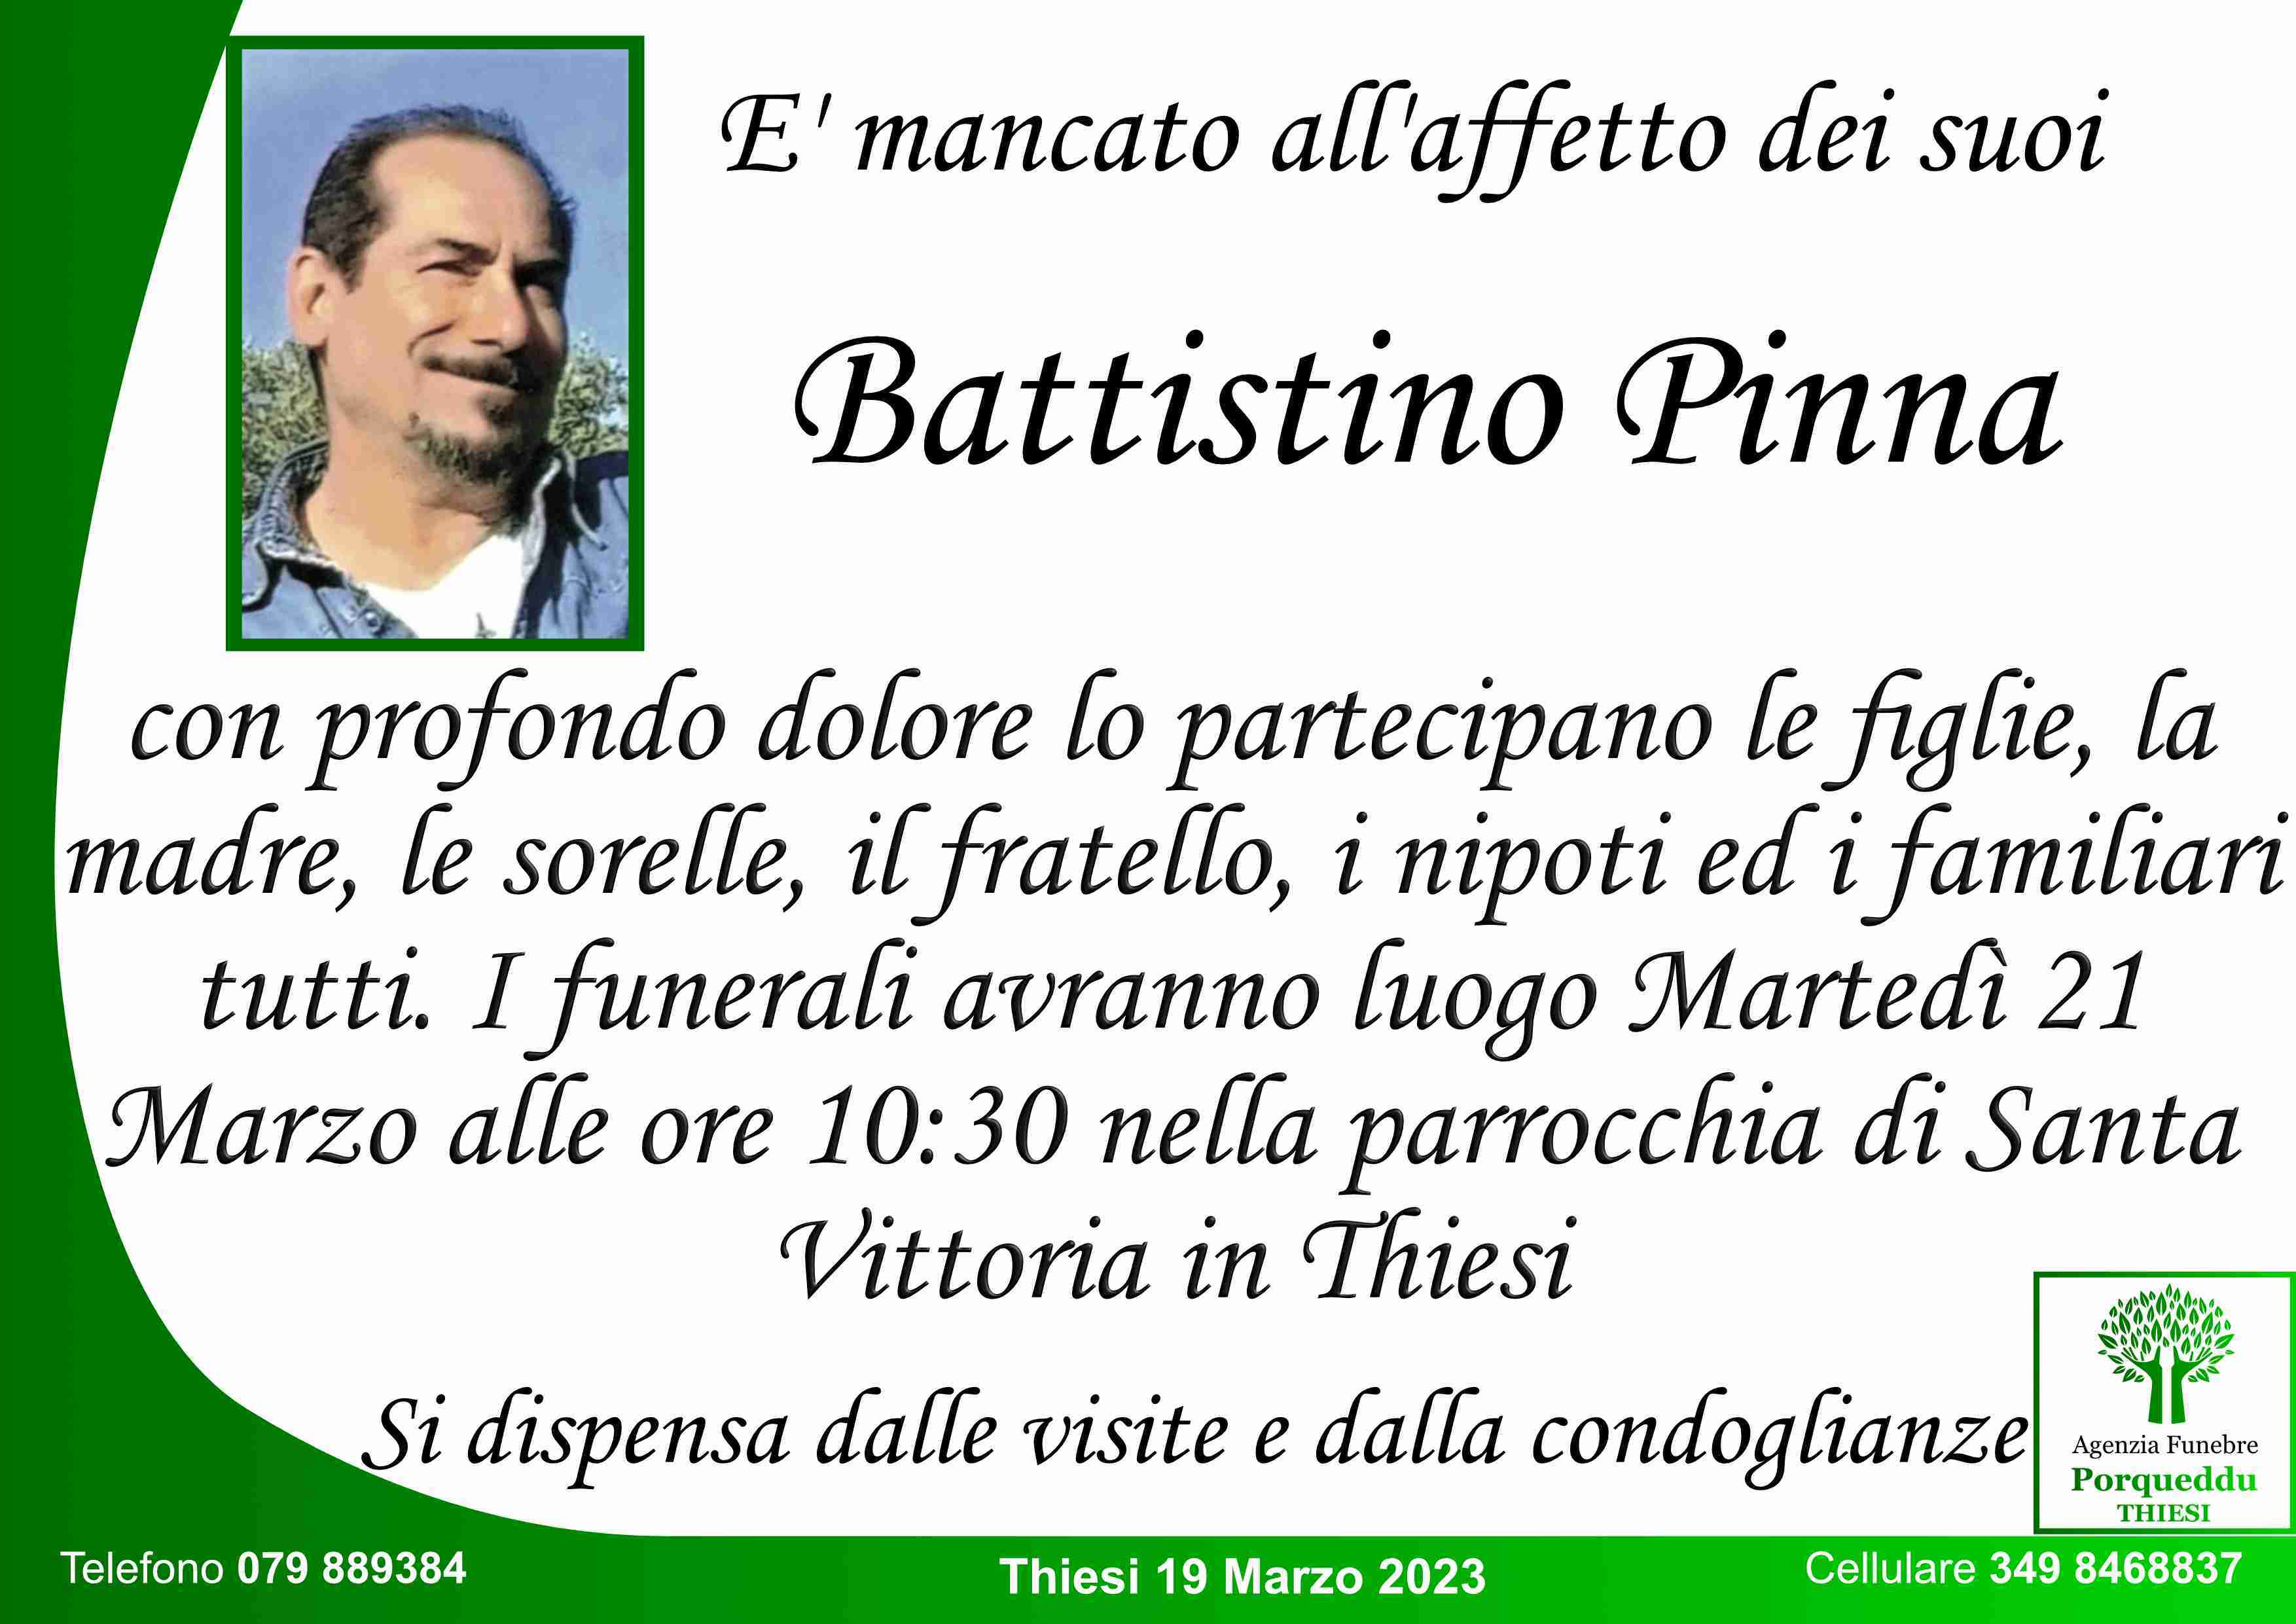 Giovanni Battista Pinna